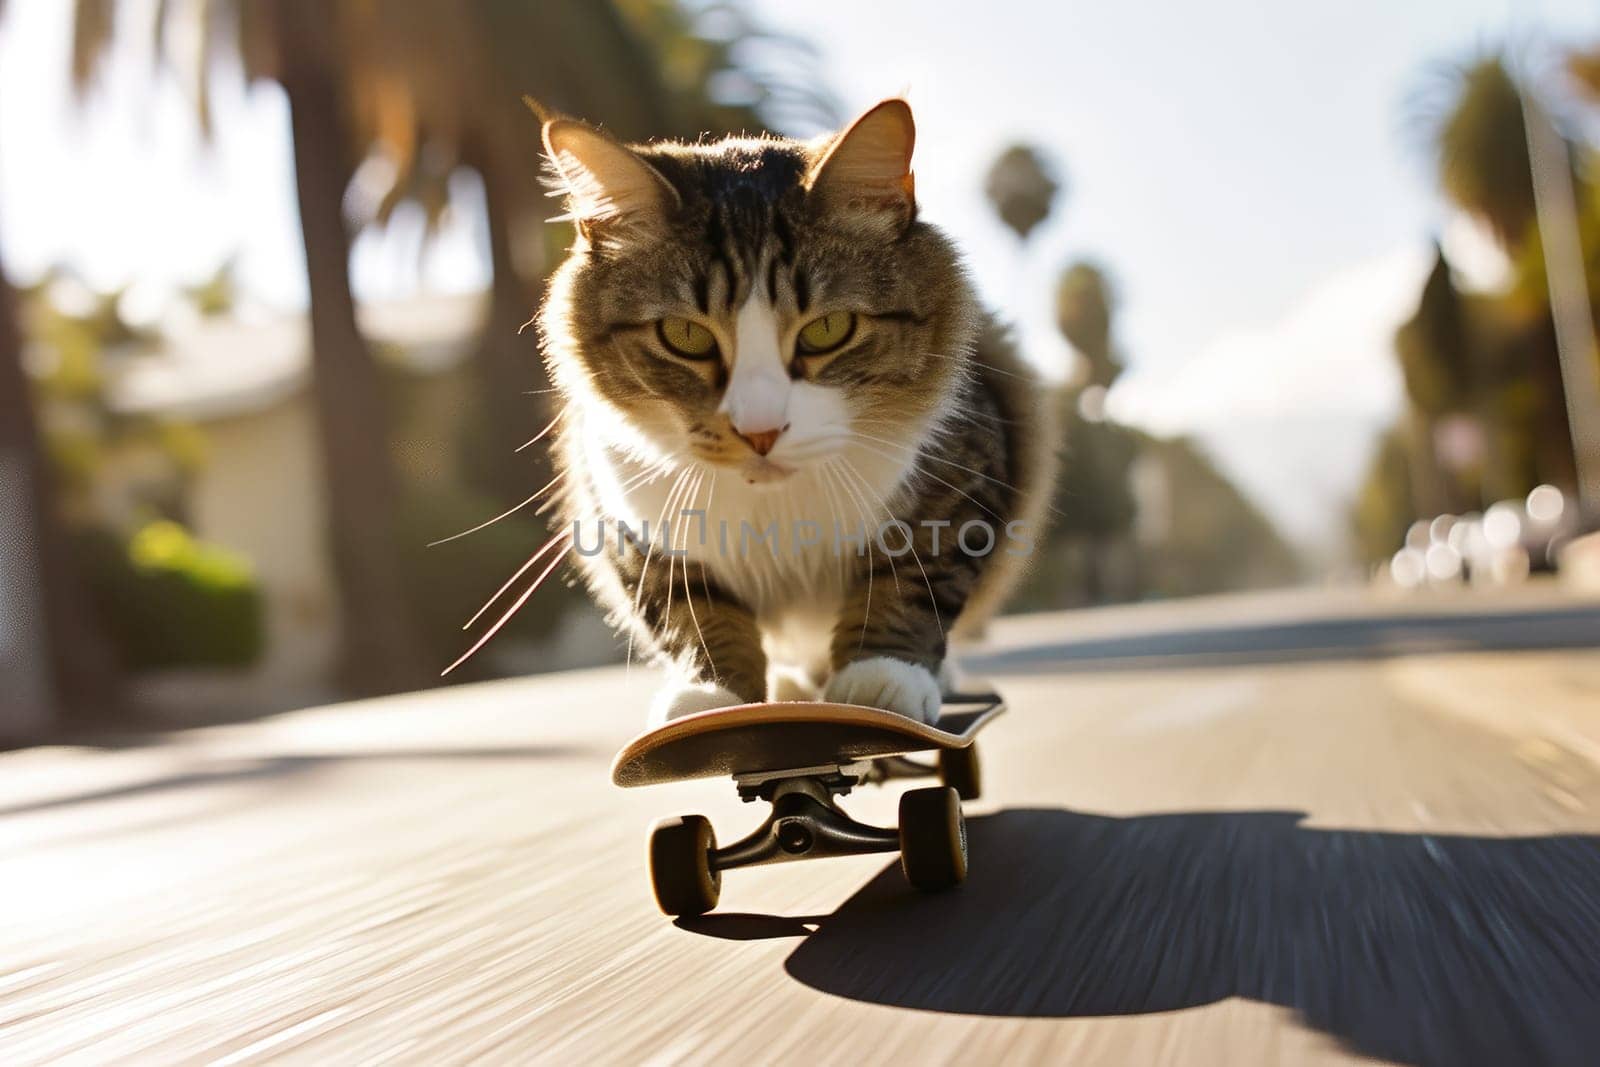 Skateboarding cat. Funny cat rides skateboard on the street in summer city.